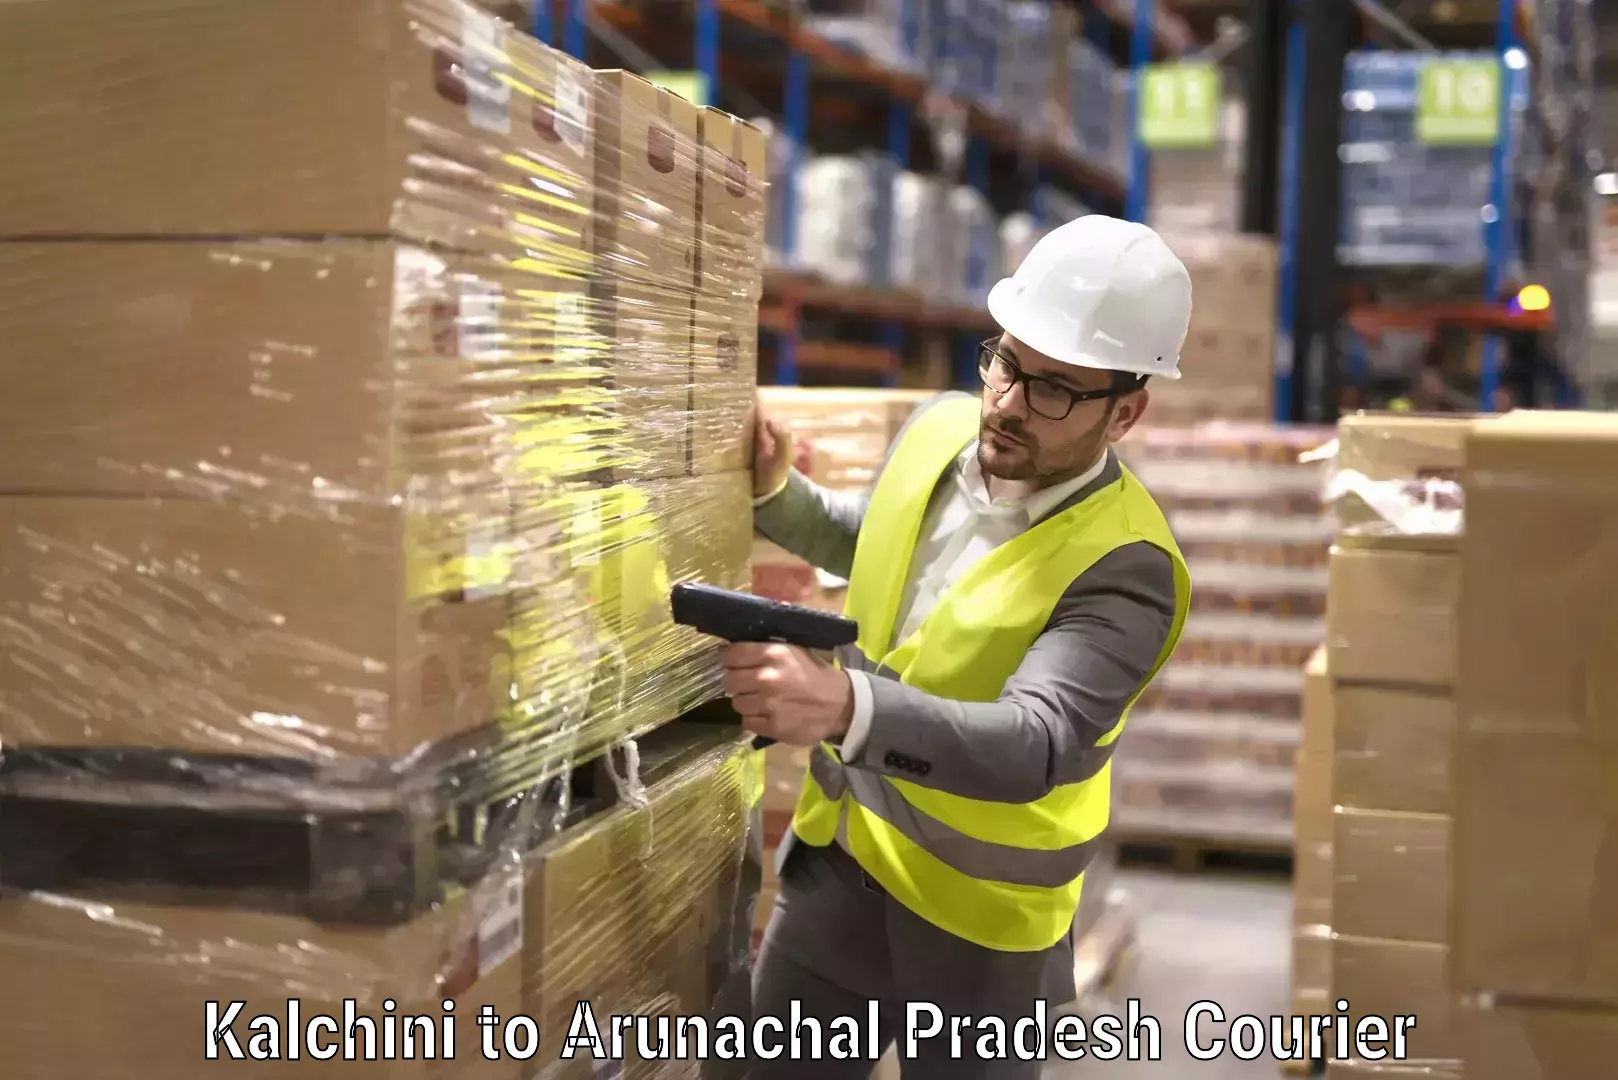 Professional moving company Kalchini to Arunachal Pradesh